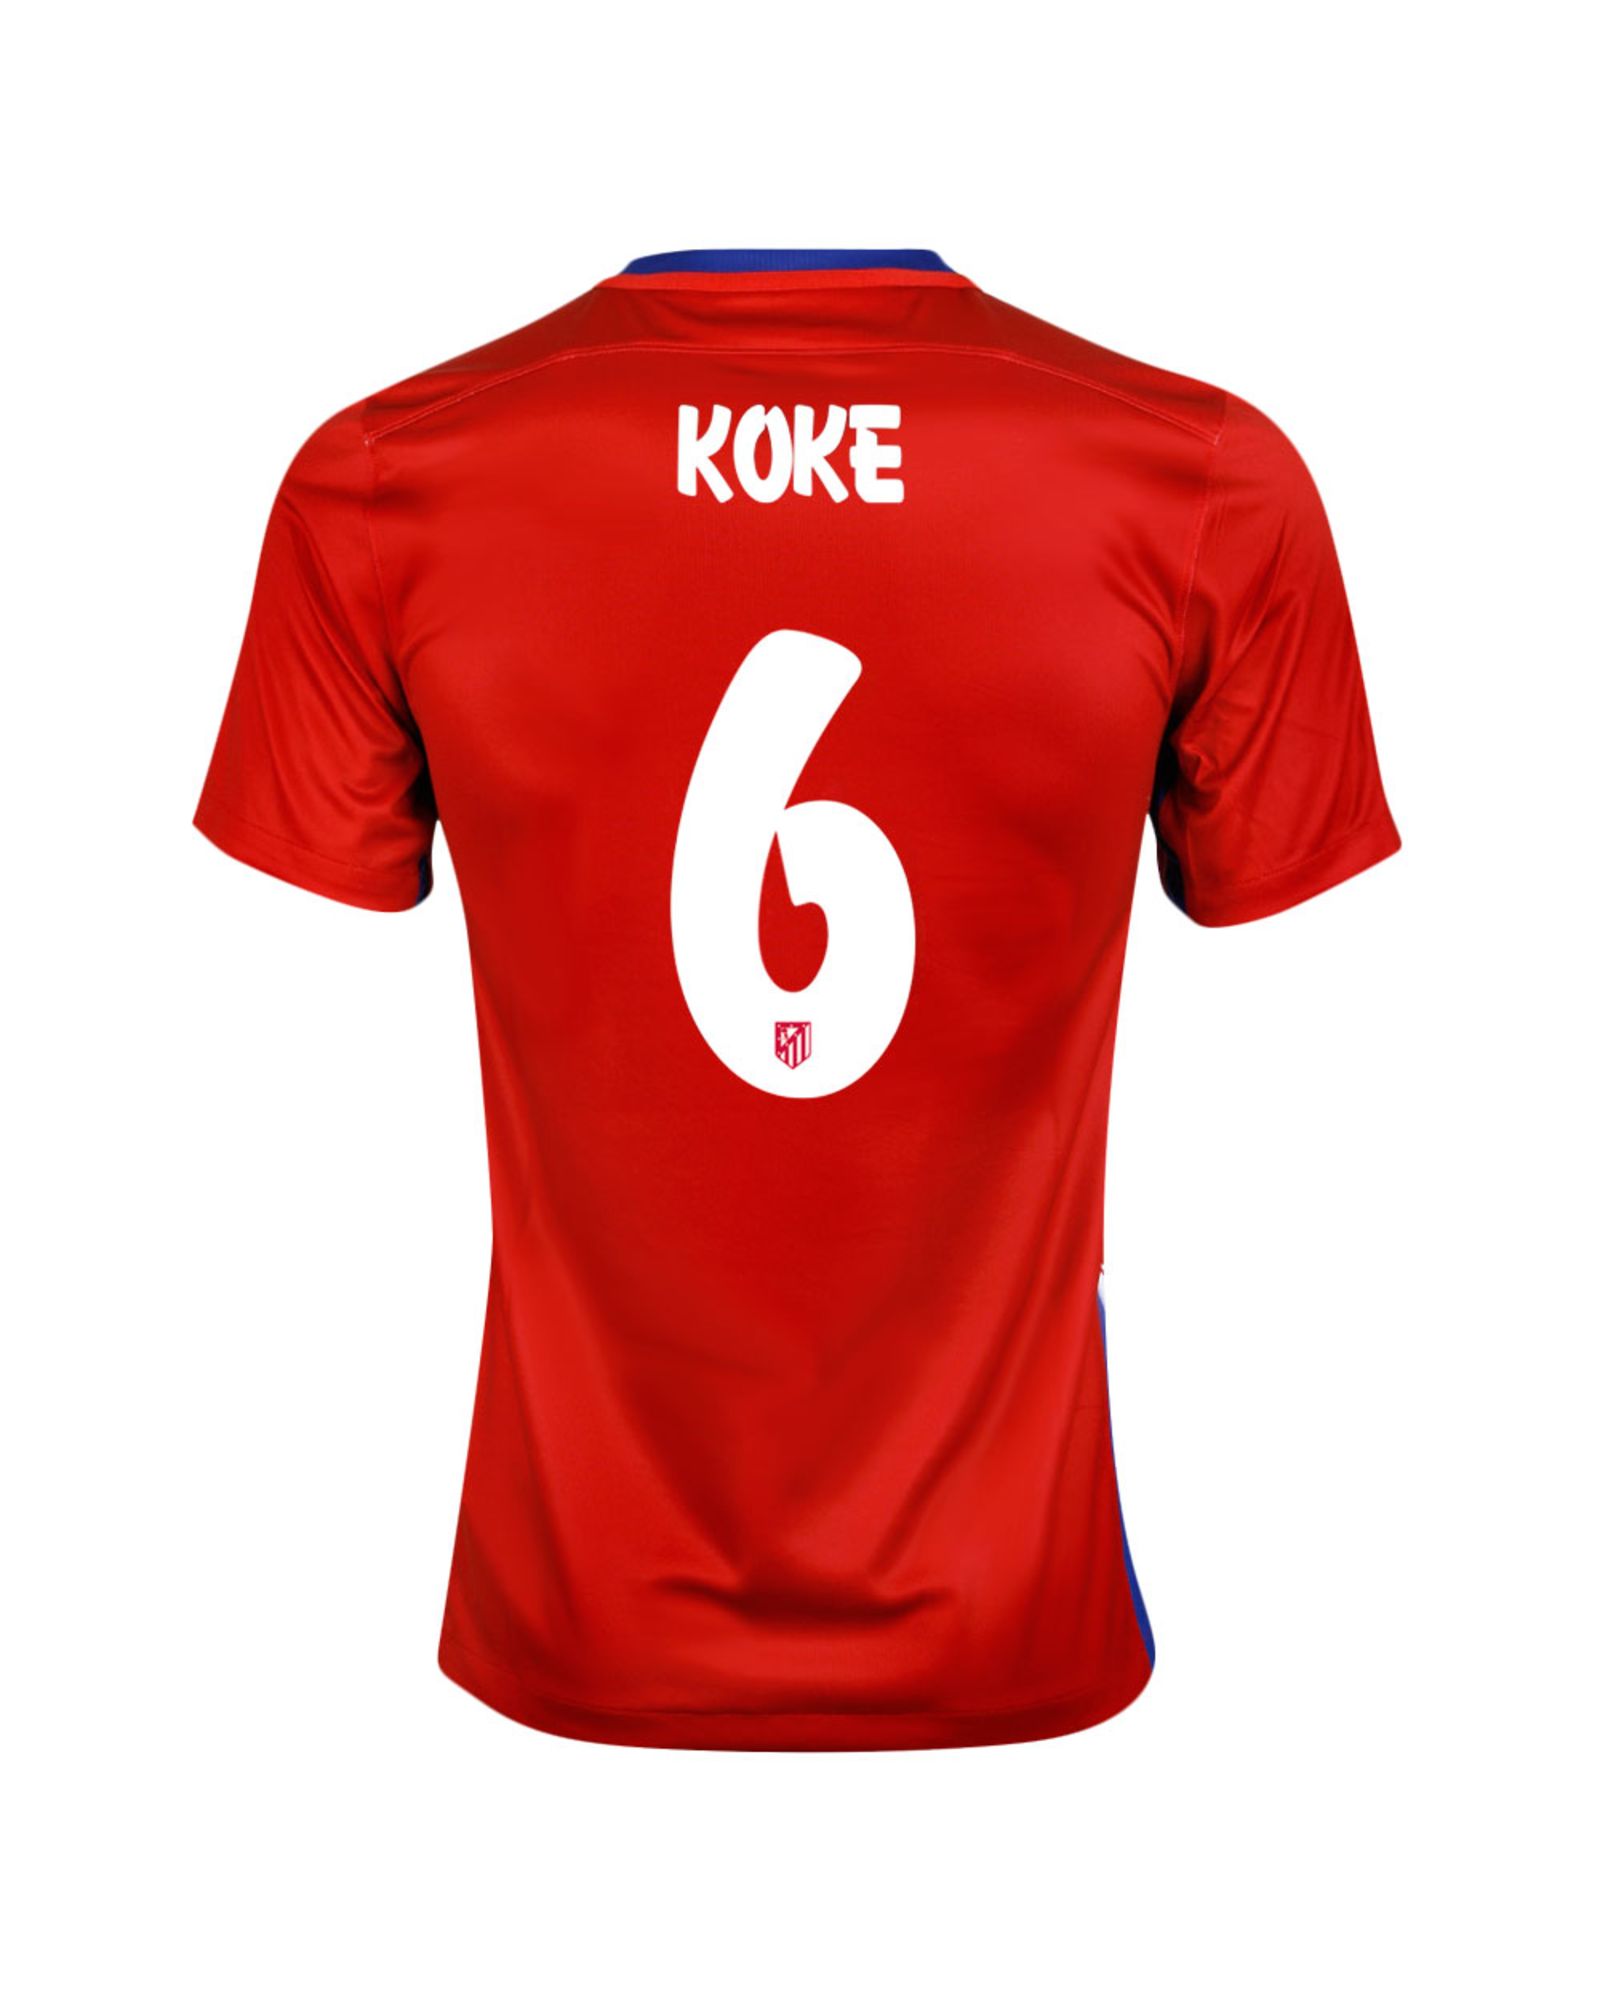 Camiseta 1ª Atlético de Madrid 2015/2016 Koke Stadium - Fútbol Factory